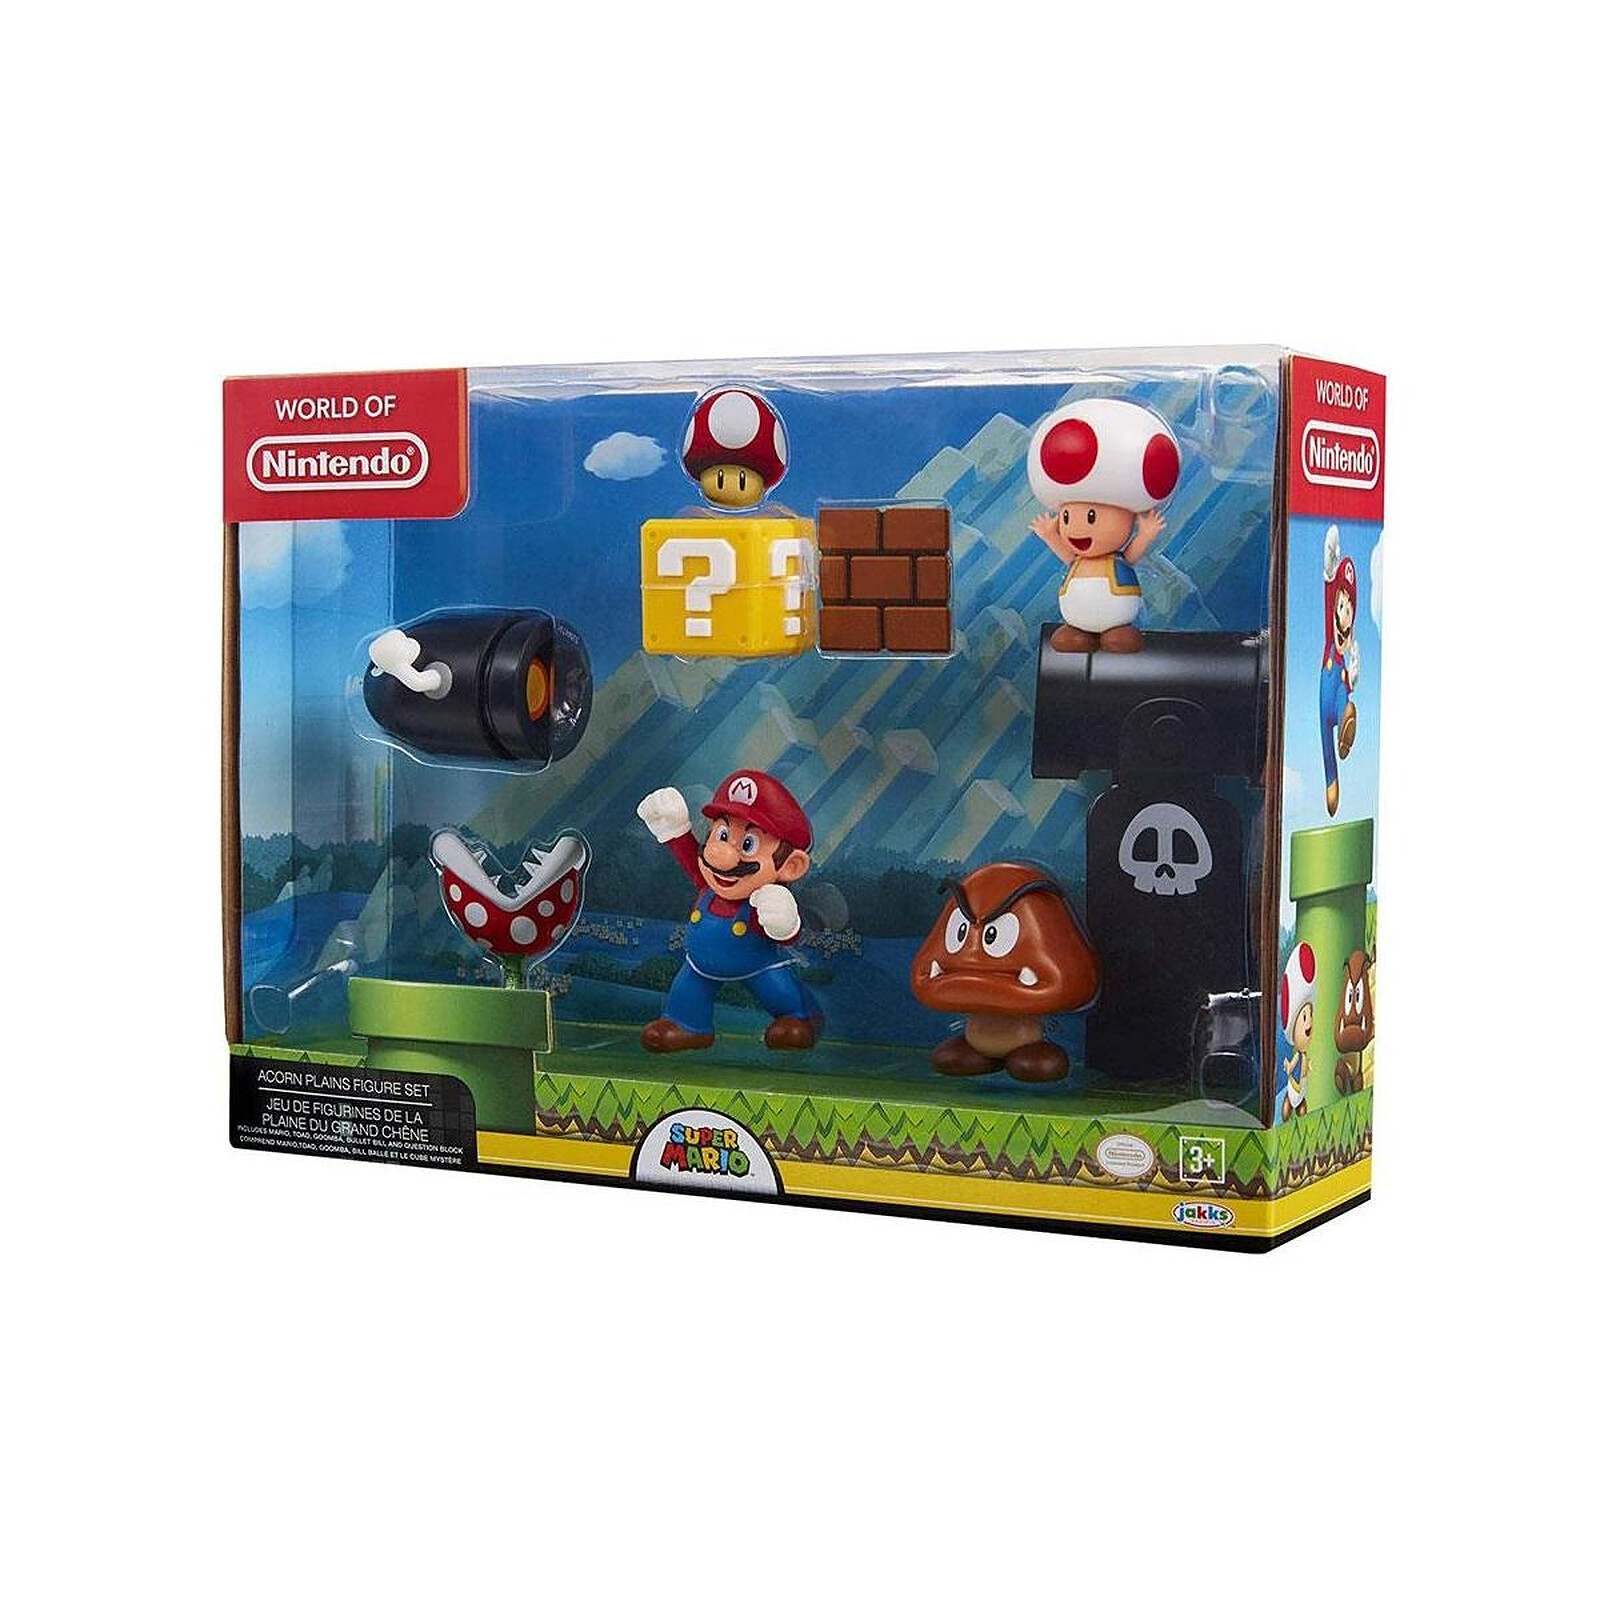 World of Nintendo - Pack 5 figurines Super Mario New Bros. U Acorn